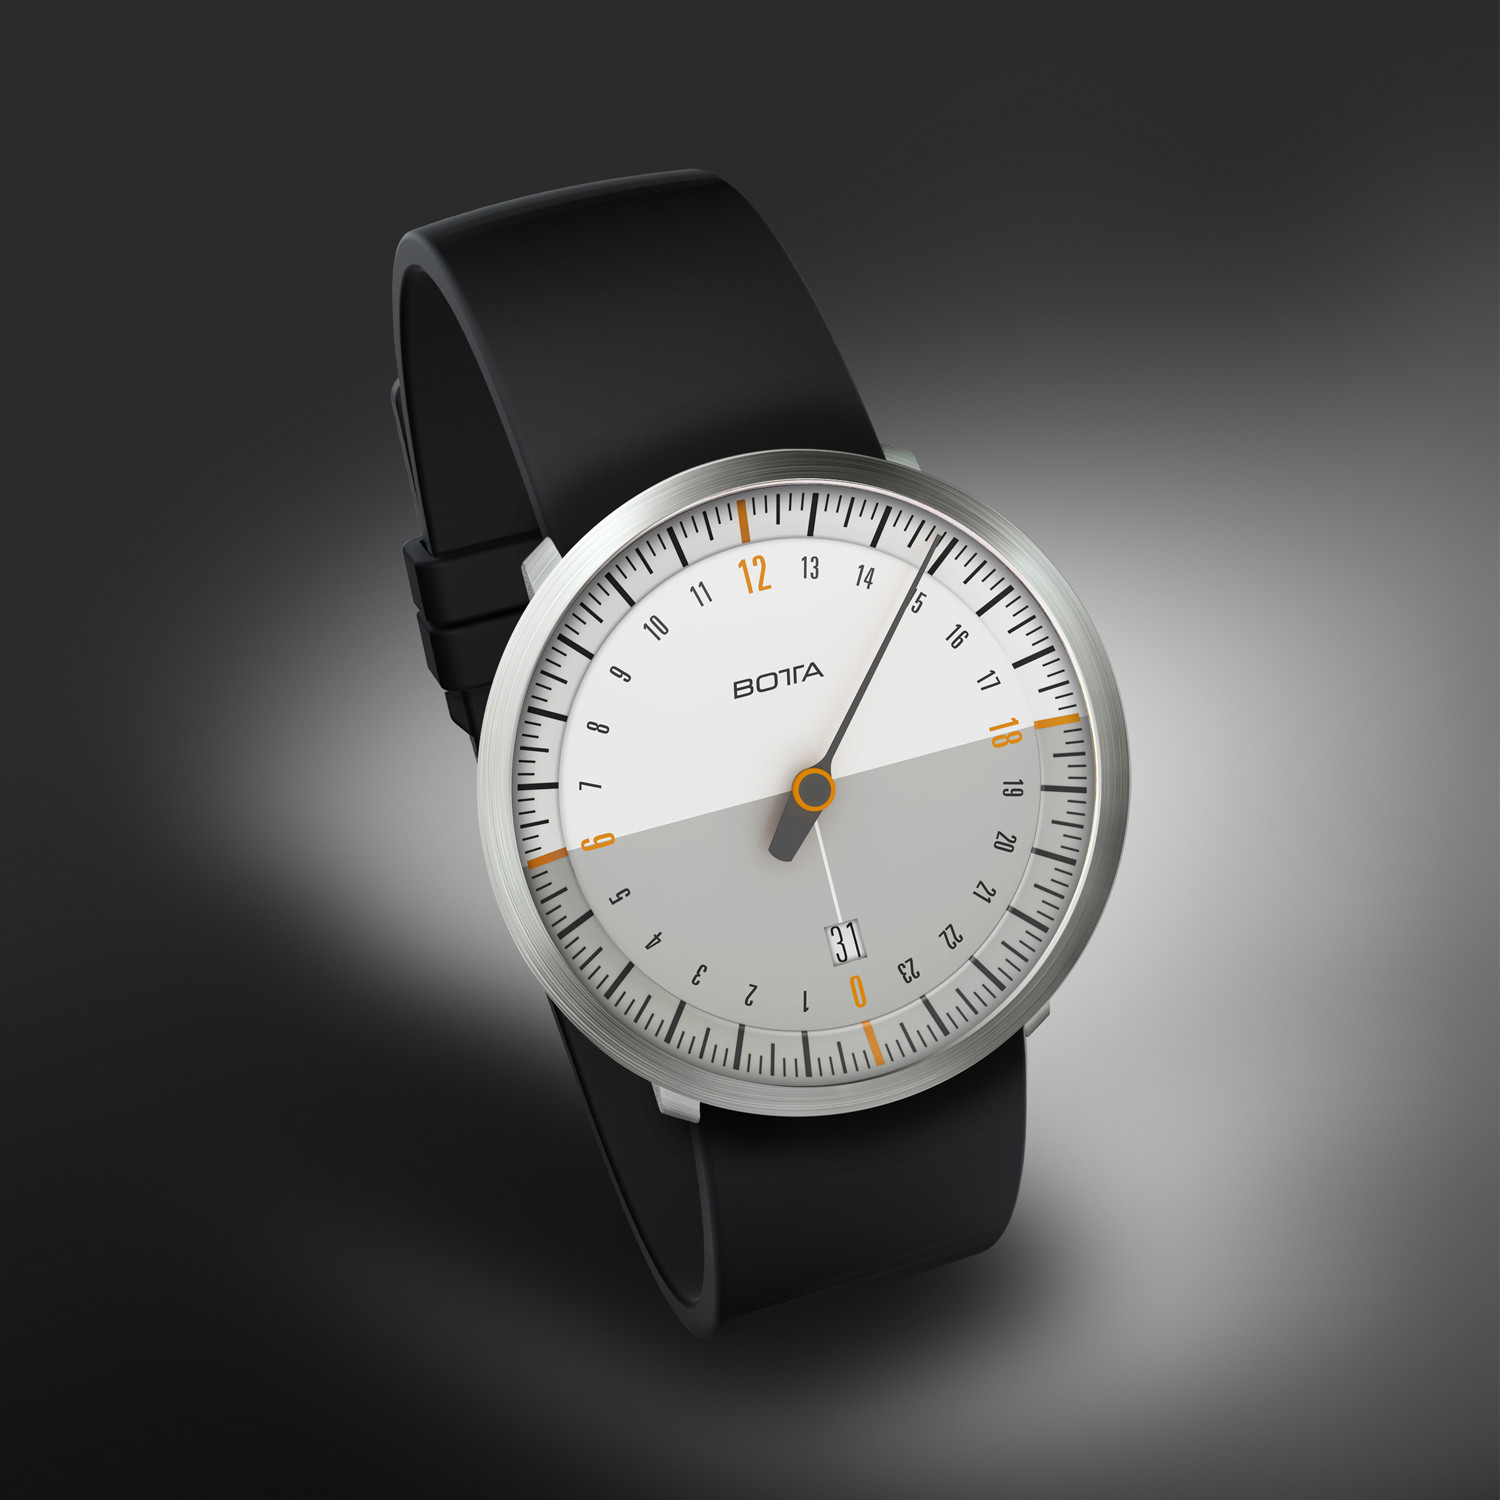 Часы honor choice watch bot wb01. Часы uno 24 Neo. Однострелочные часы Ботта. Botta часы 24 часа. Однострелочник Botta.